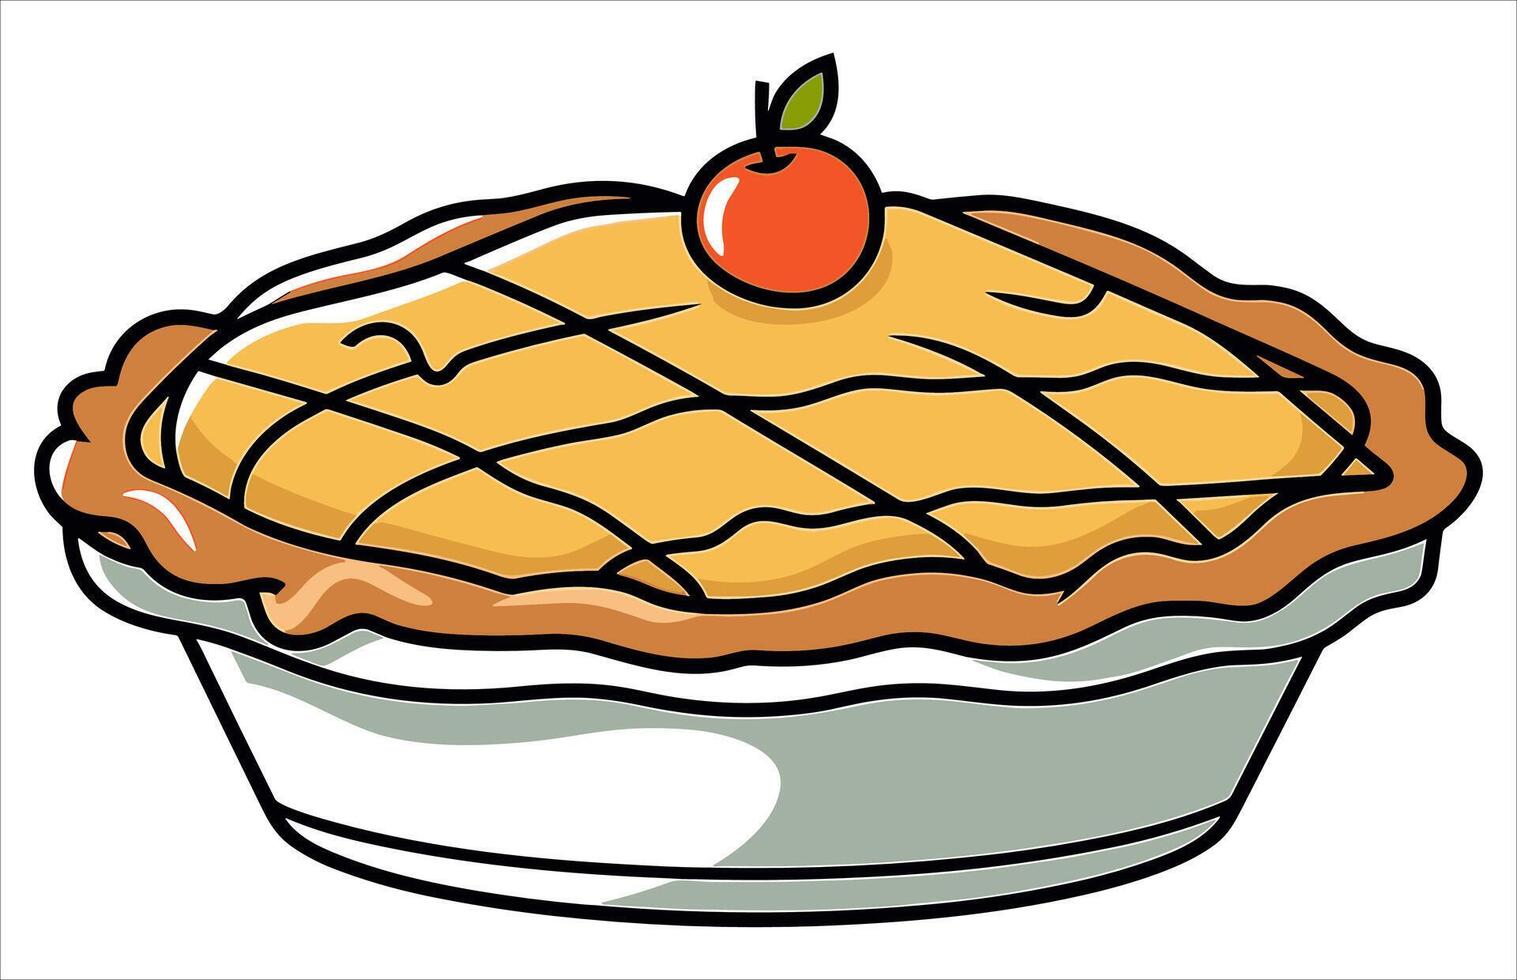 Apple pie Flat Design Dessert Icon, Illustration of an Apple pie. vector